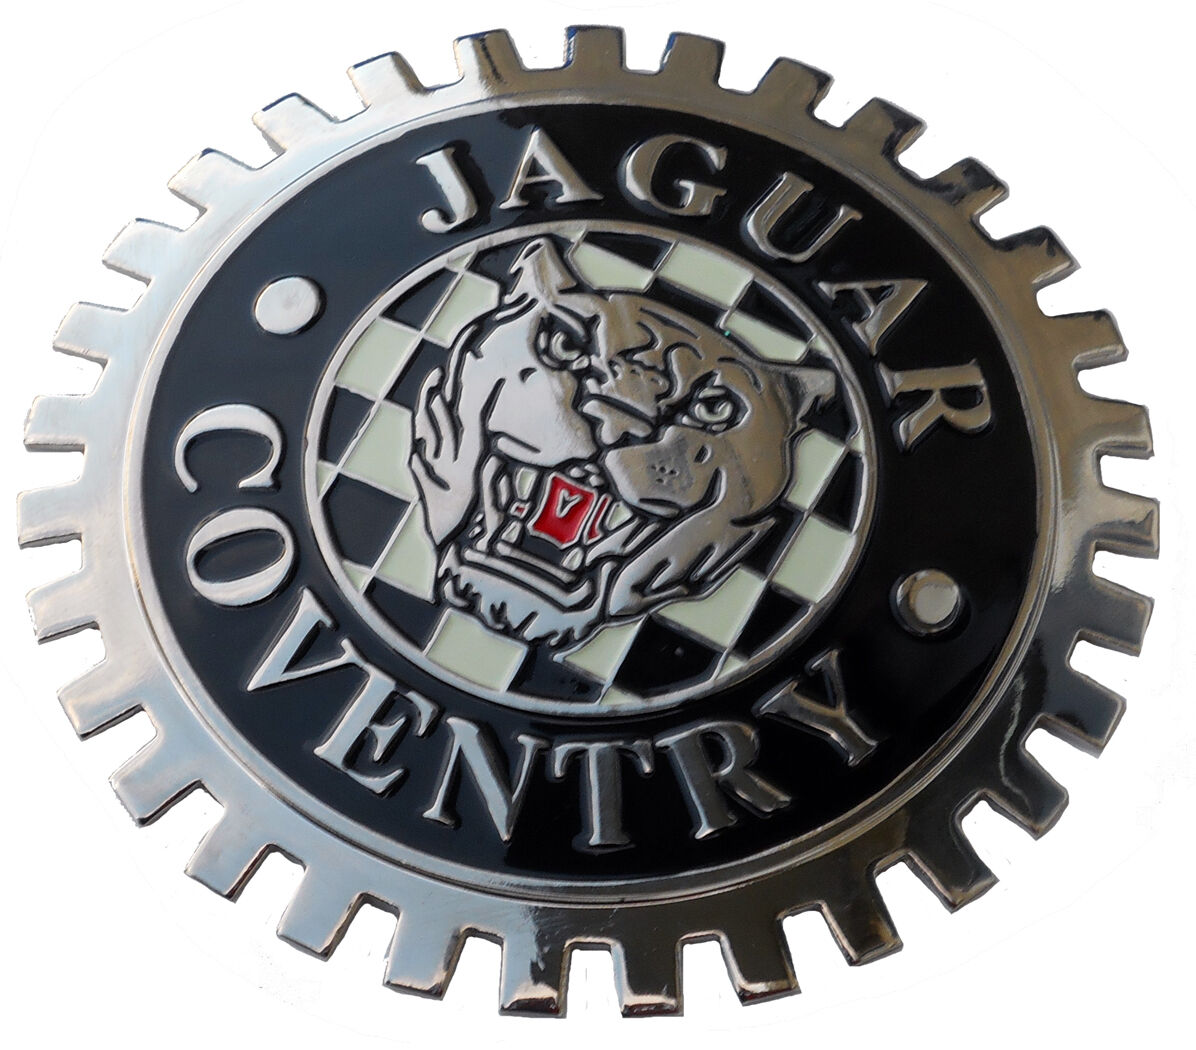 Jaguar growler XKE style car grille badge c/w grille mounting hardware